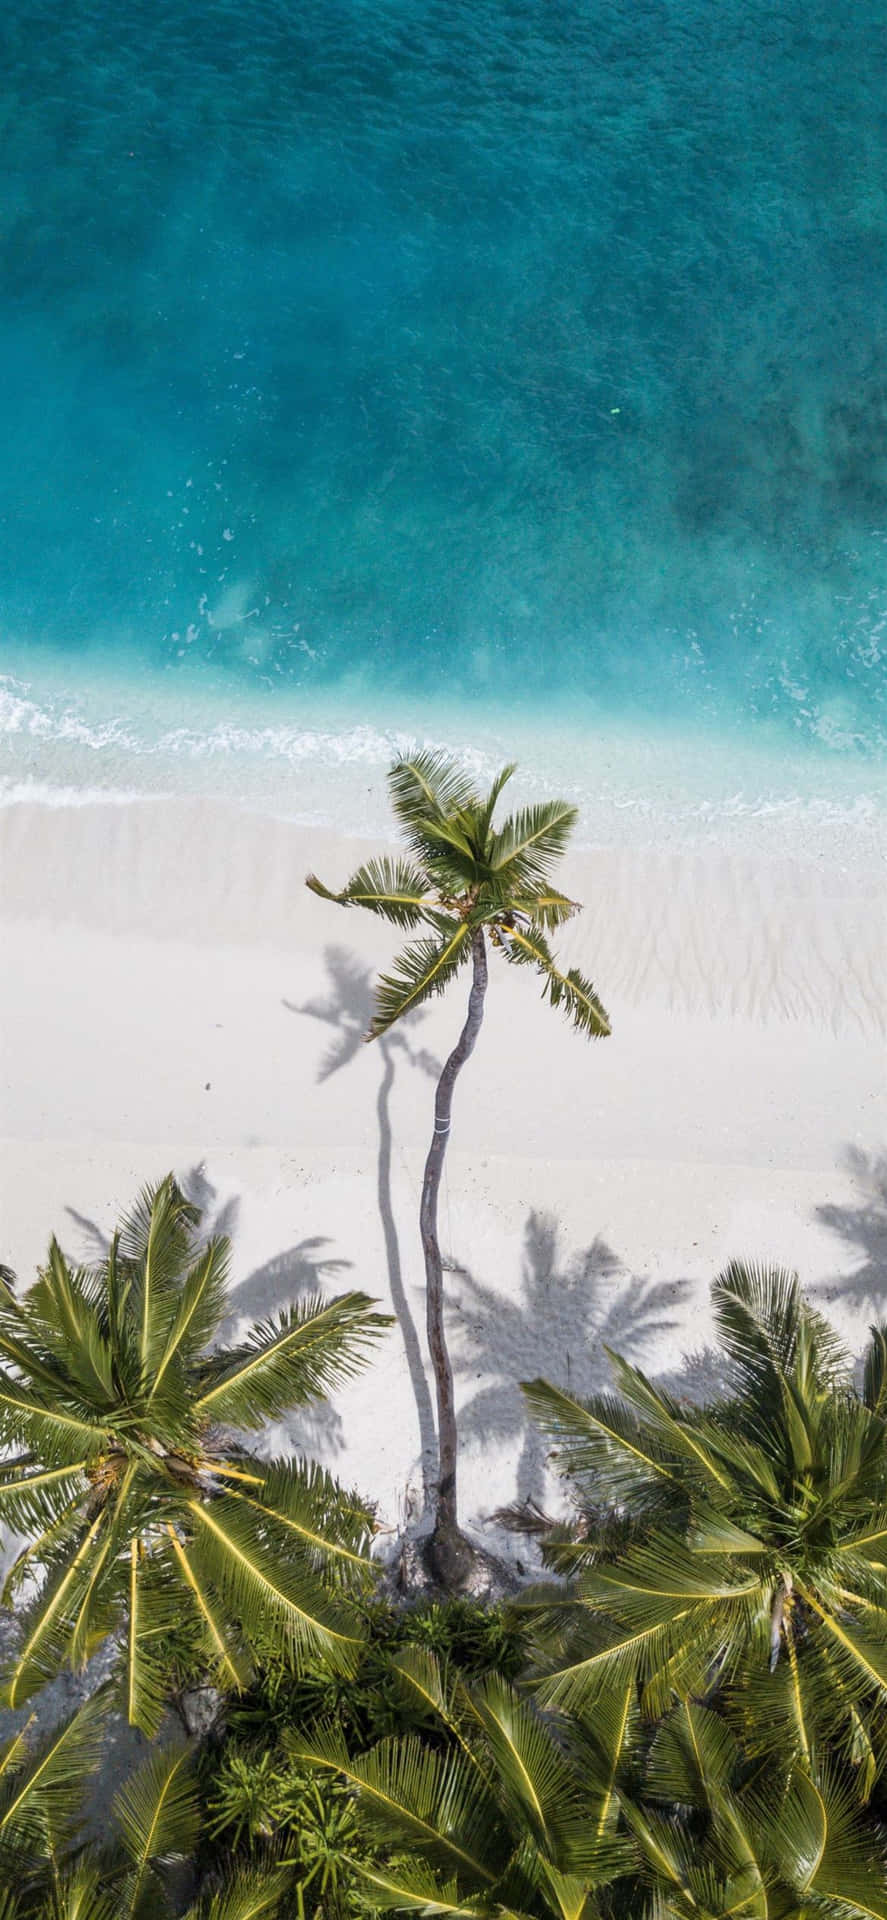 Tropical Paradise: Coconut Trees Beside the Beach